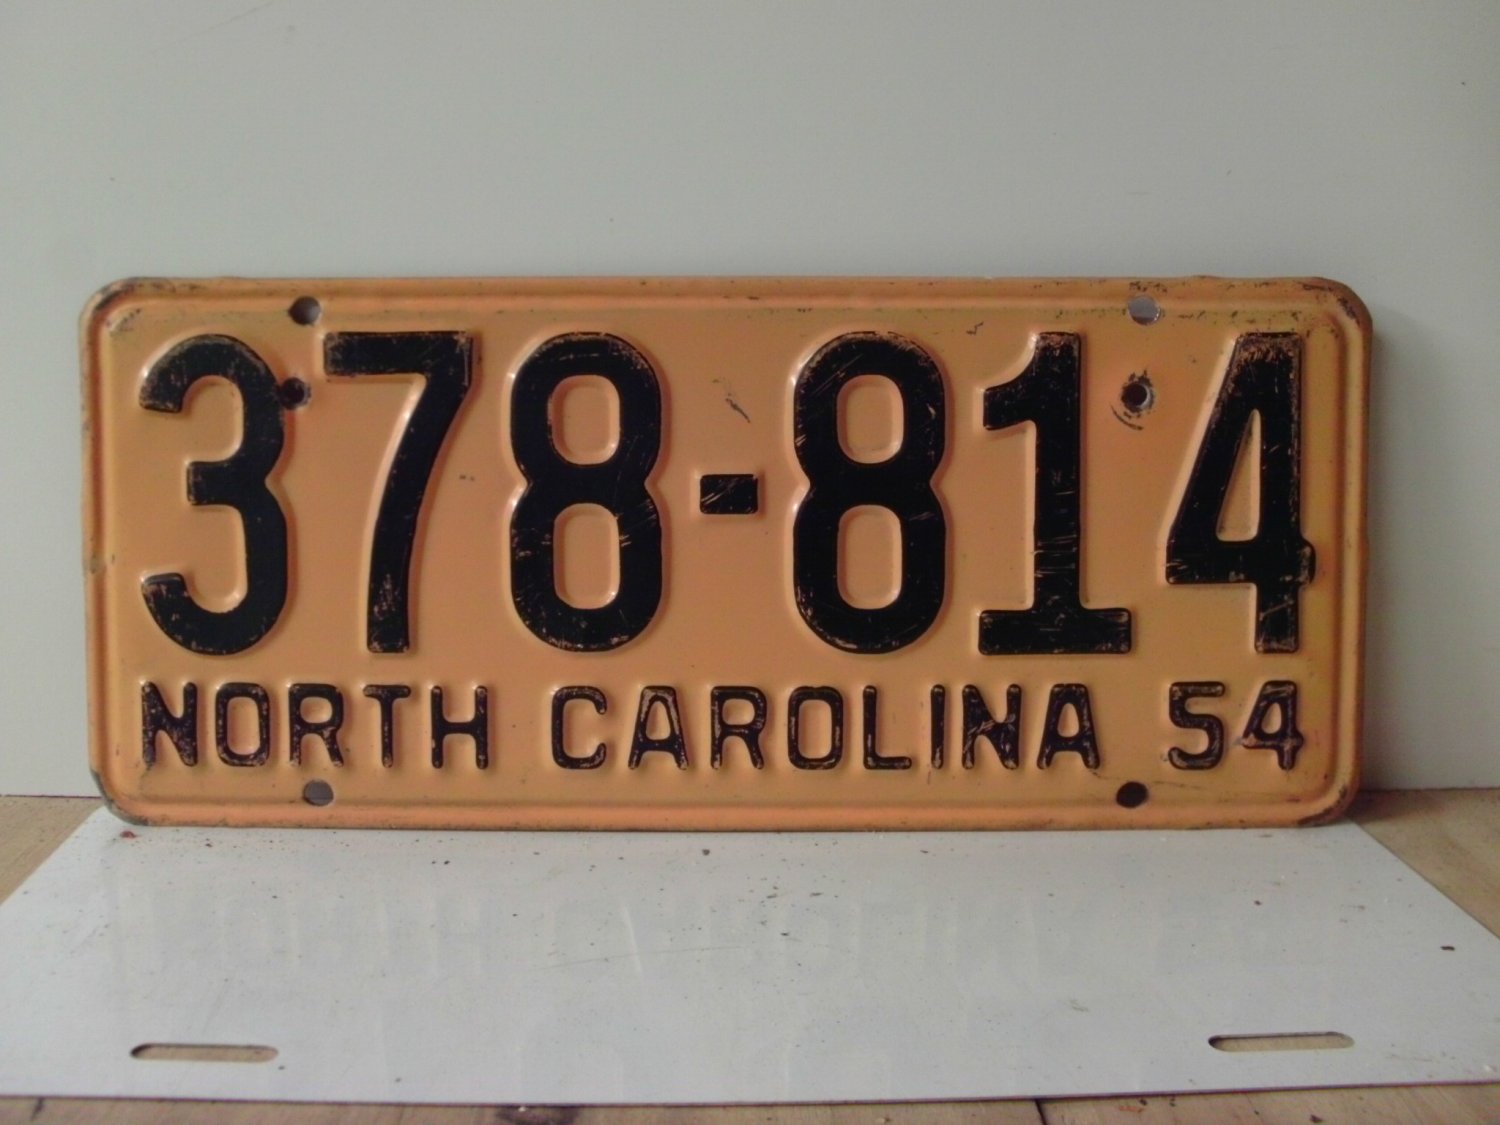 1954 North Carolina NC License Plate #378-814 Extra Holes NC1